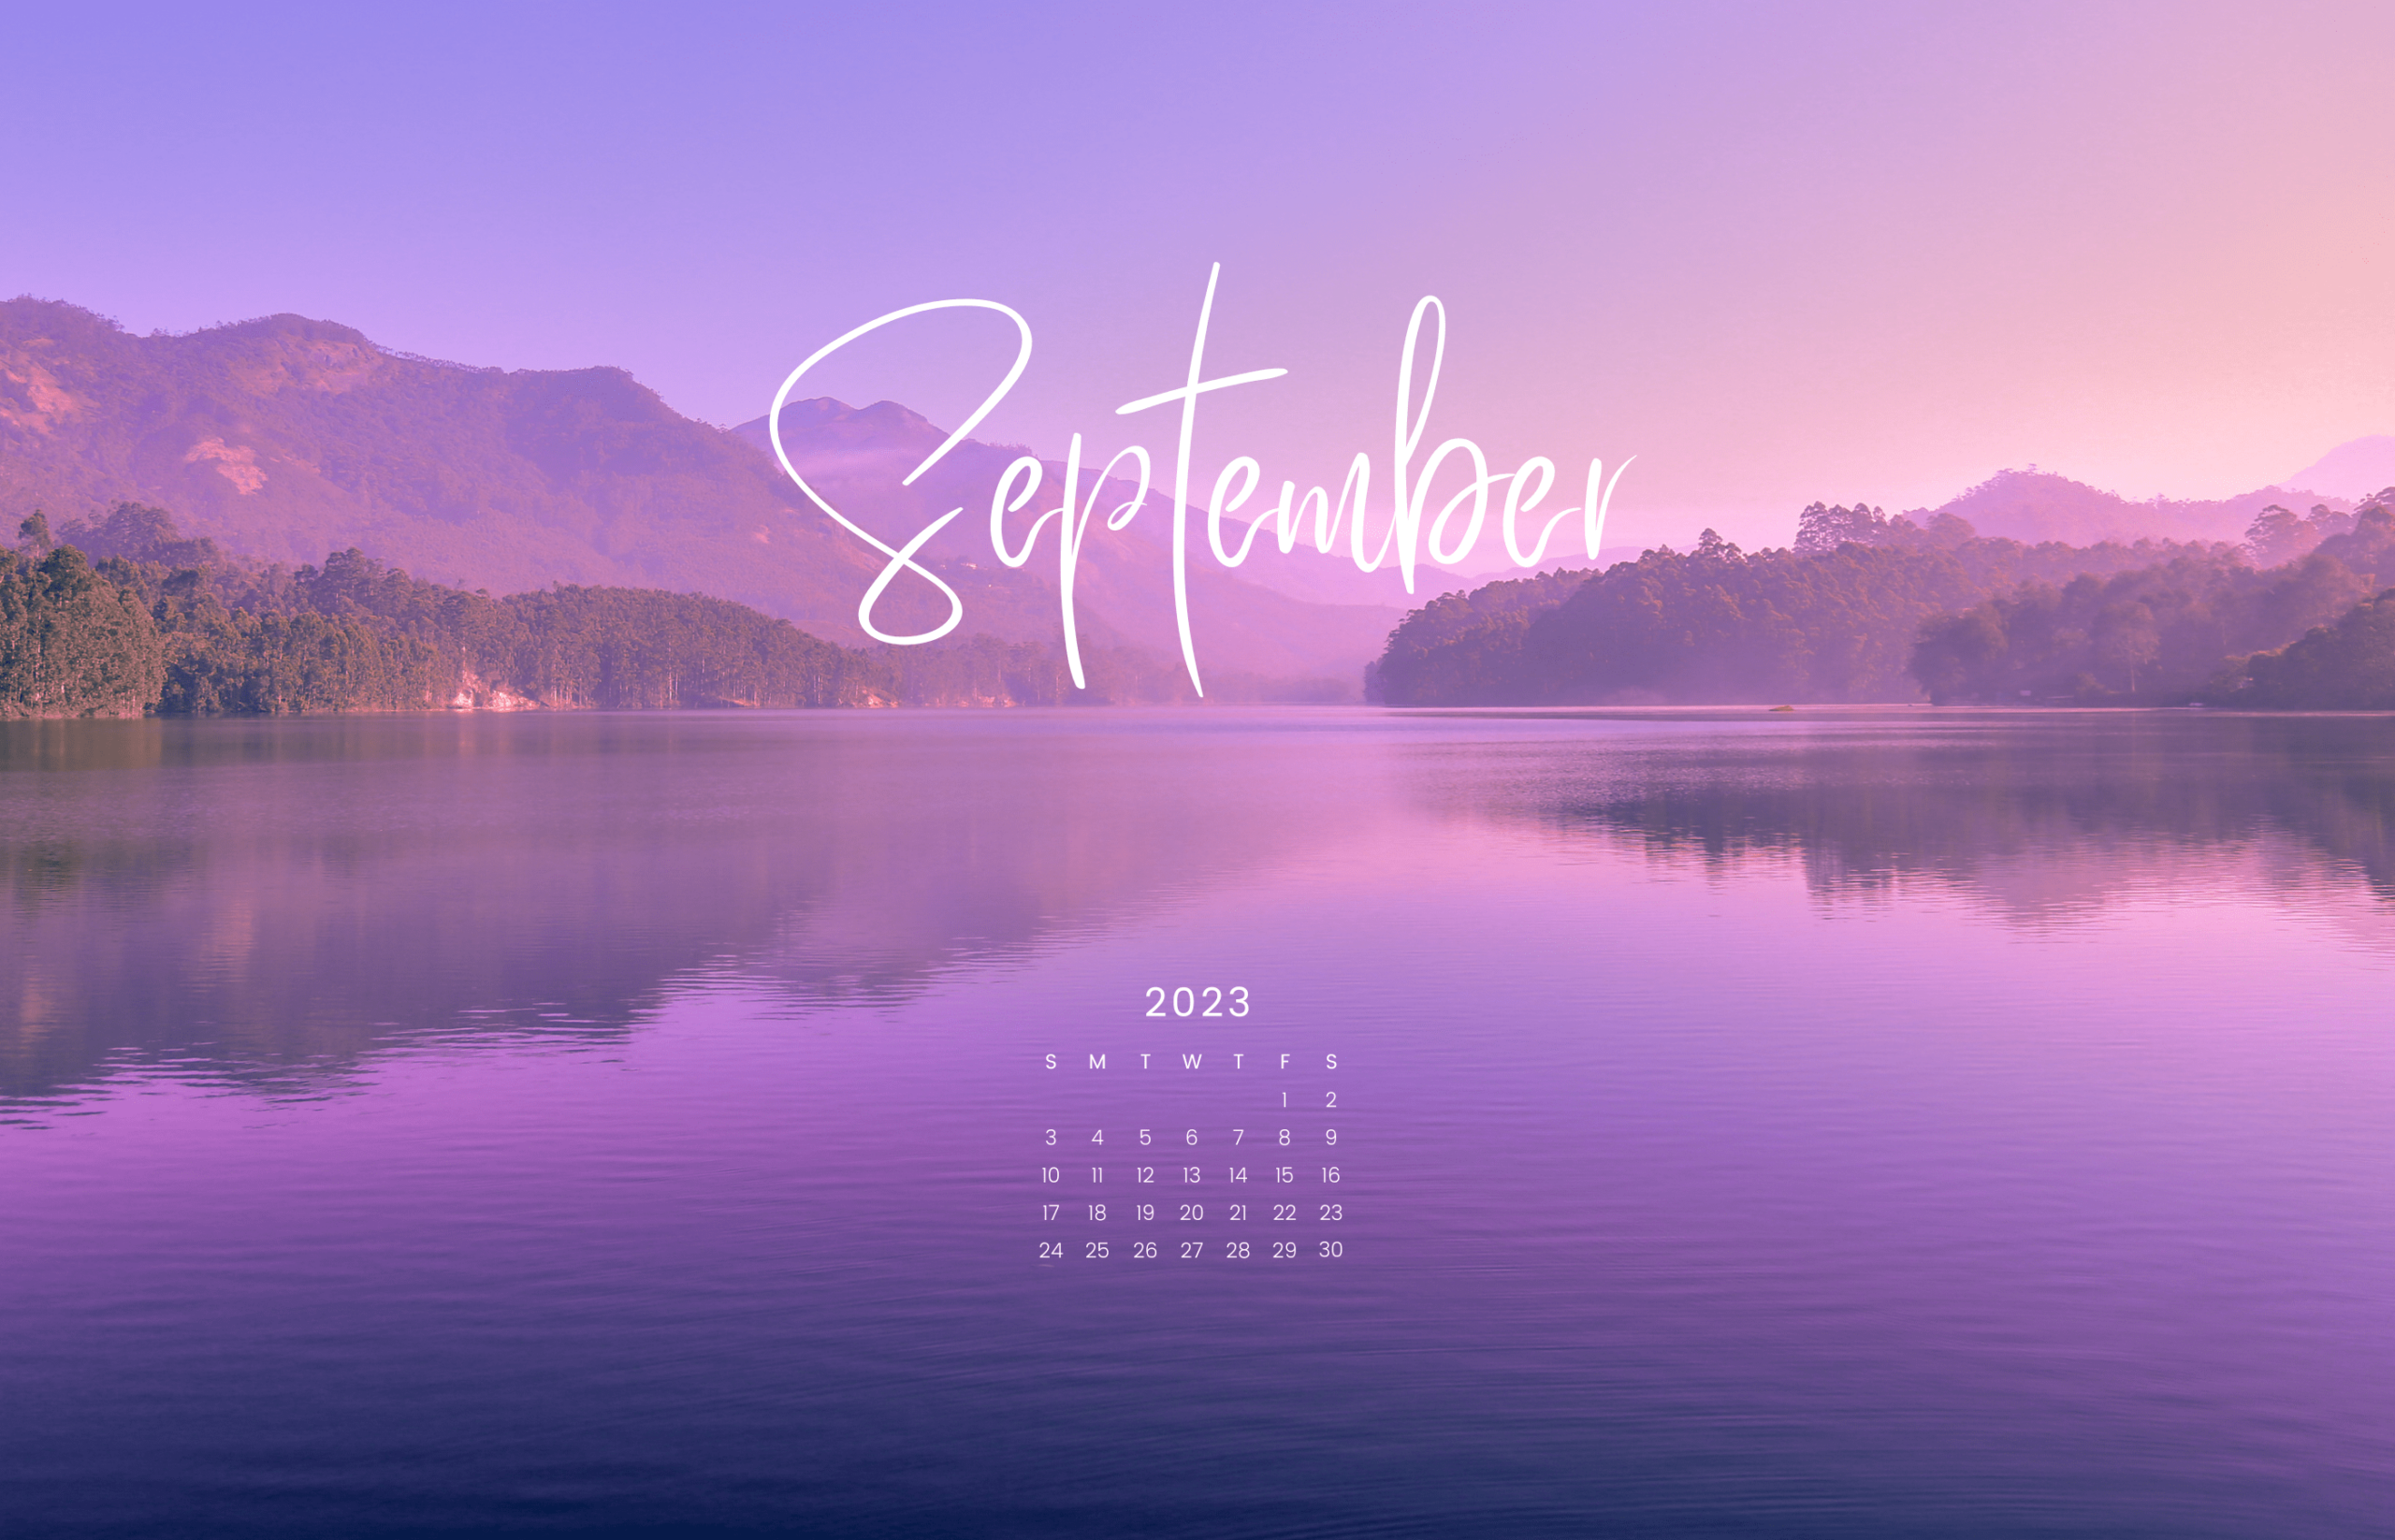 September 2021 wallpapers  35 FREE calendars for desktop and phones